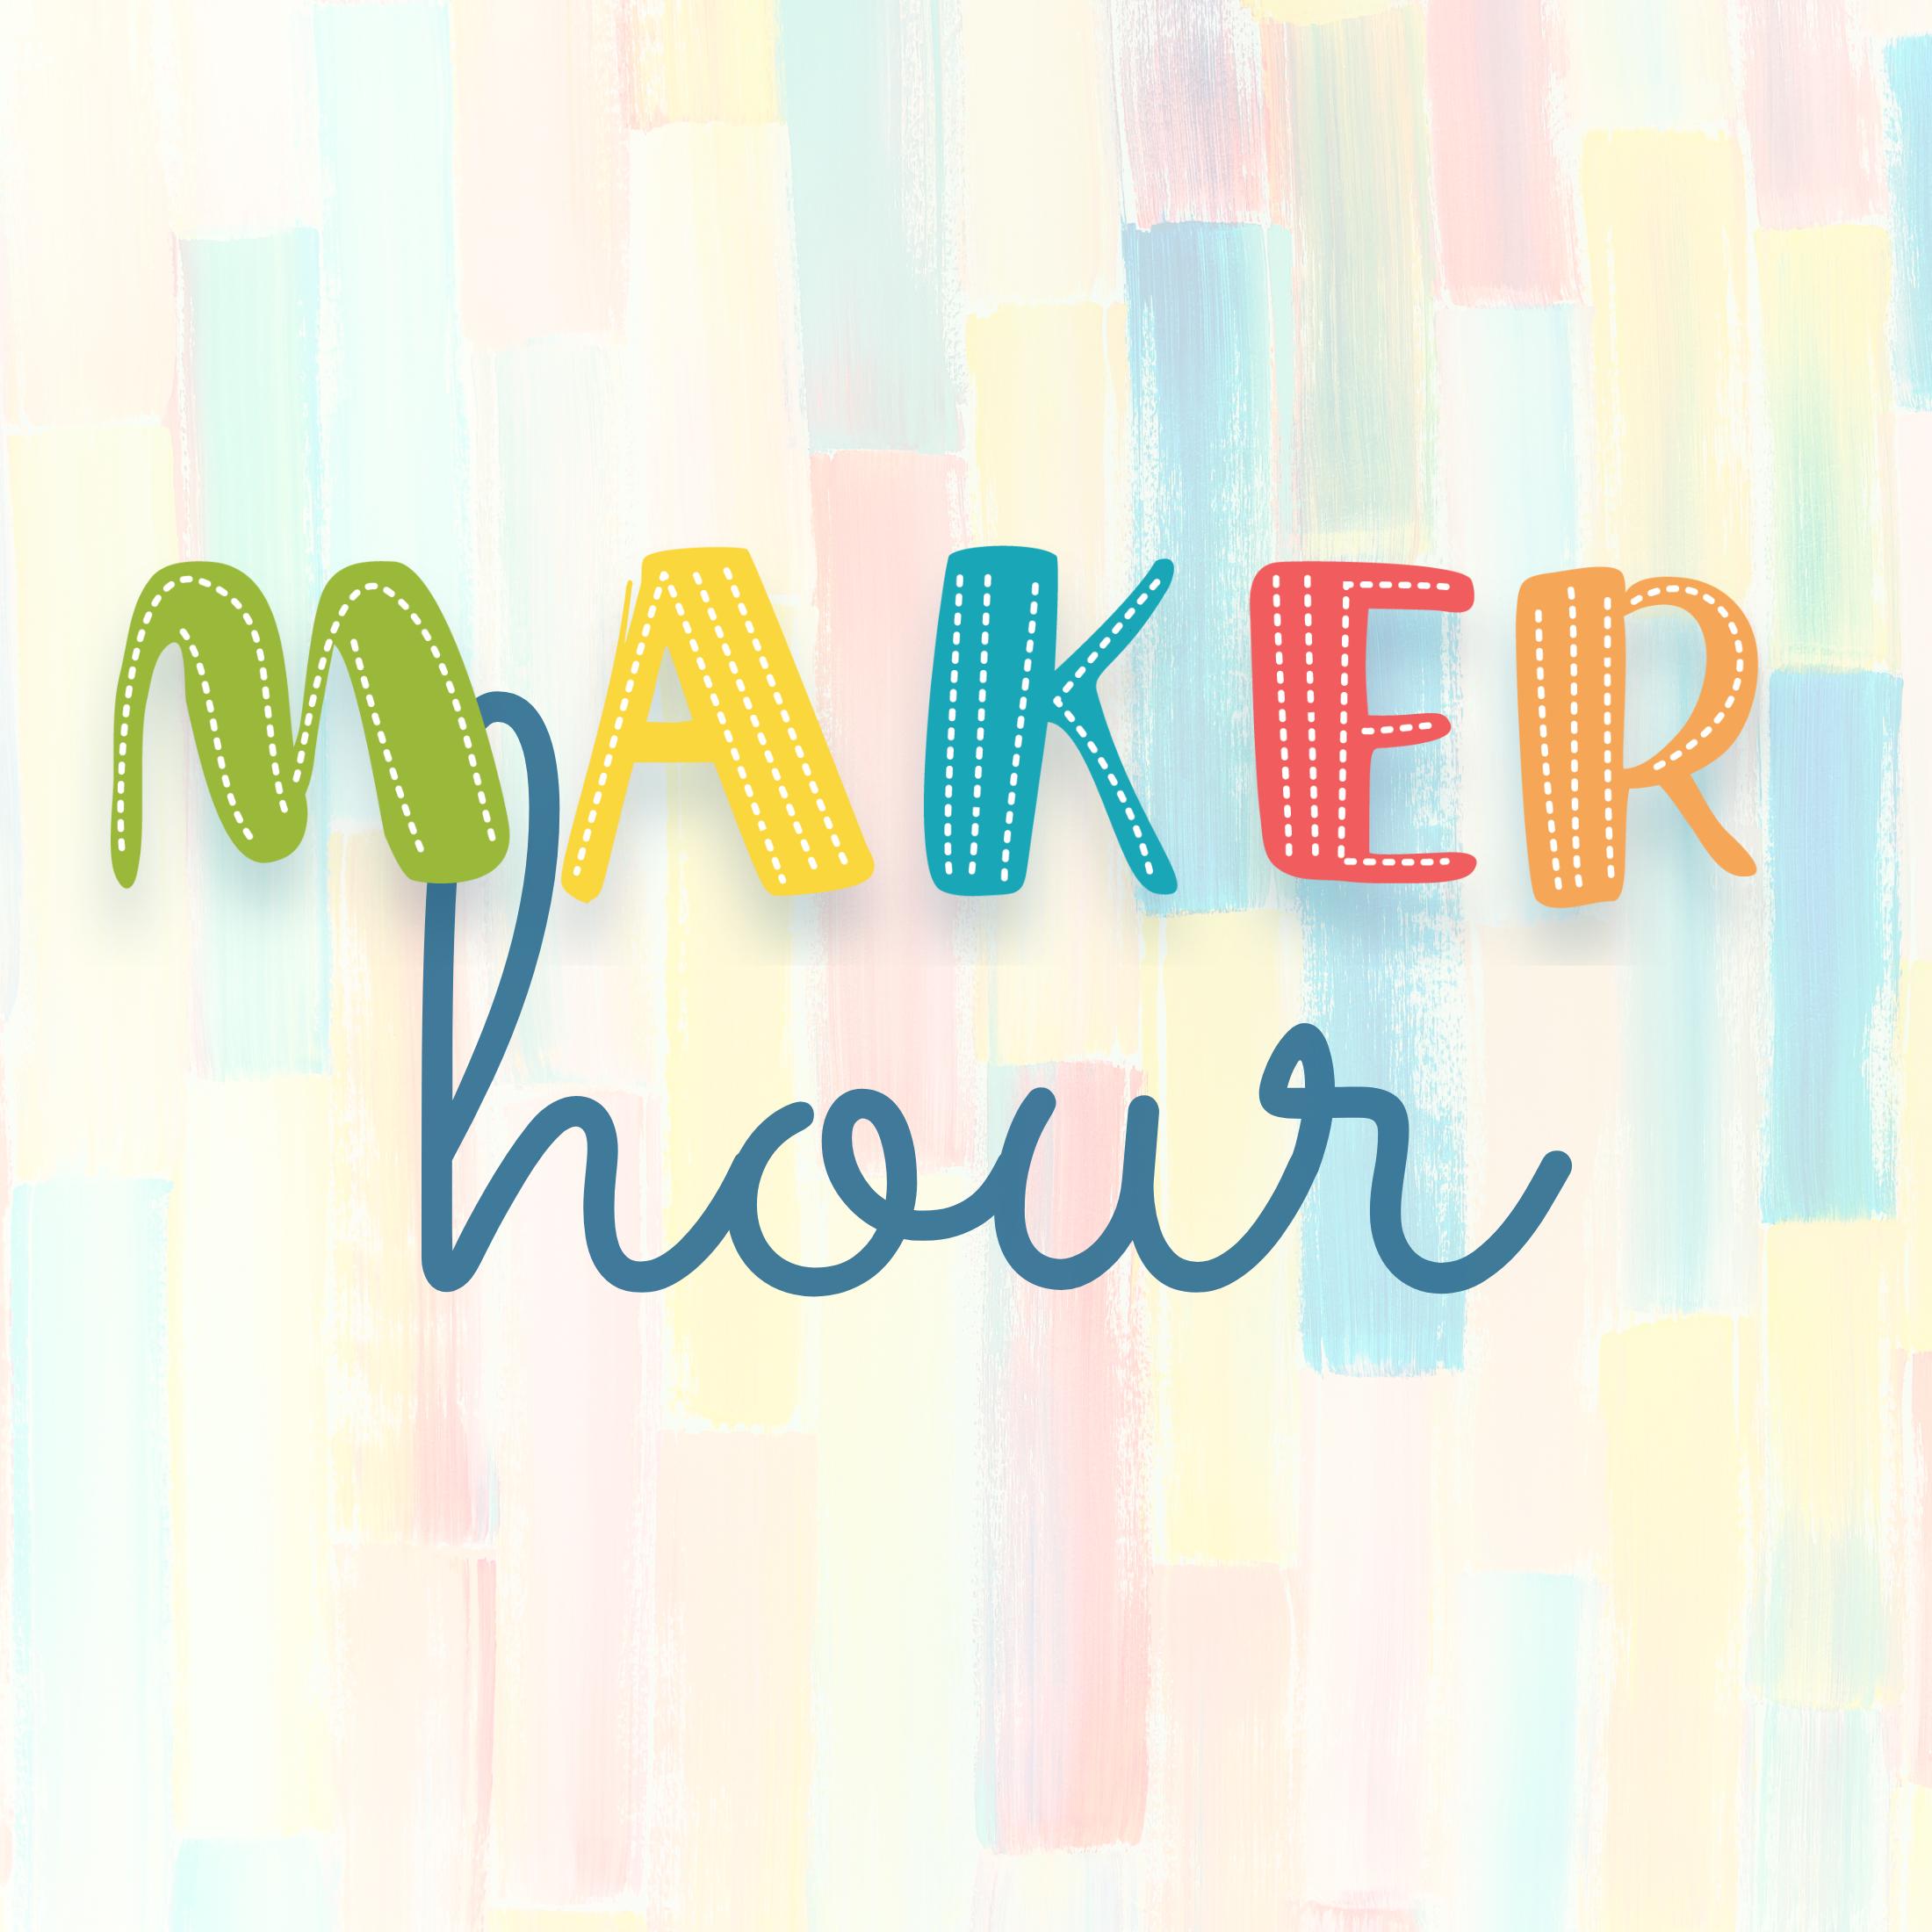 Maker hour